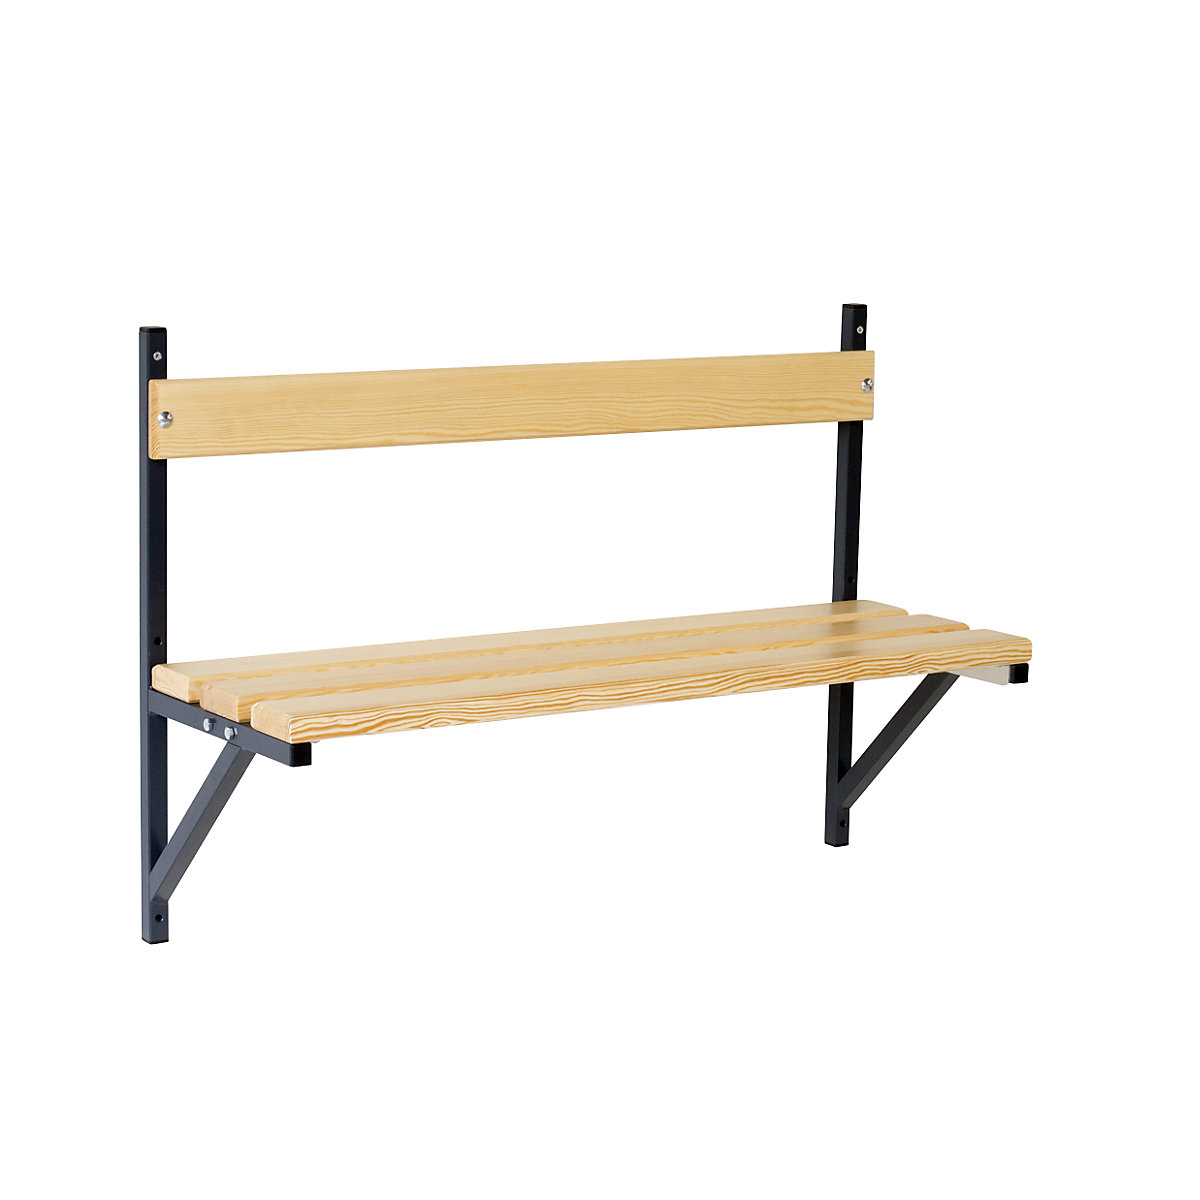 Wall mounted bench – Sypro